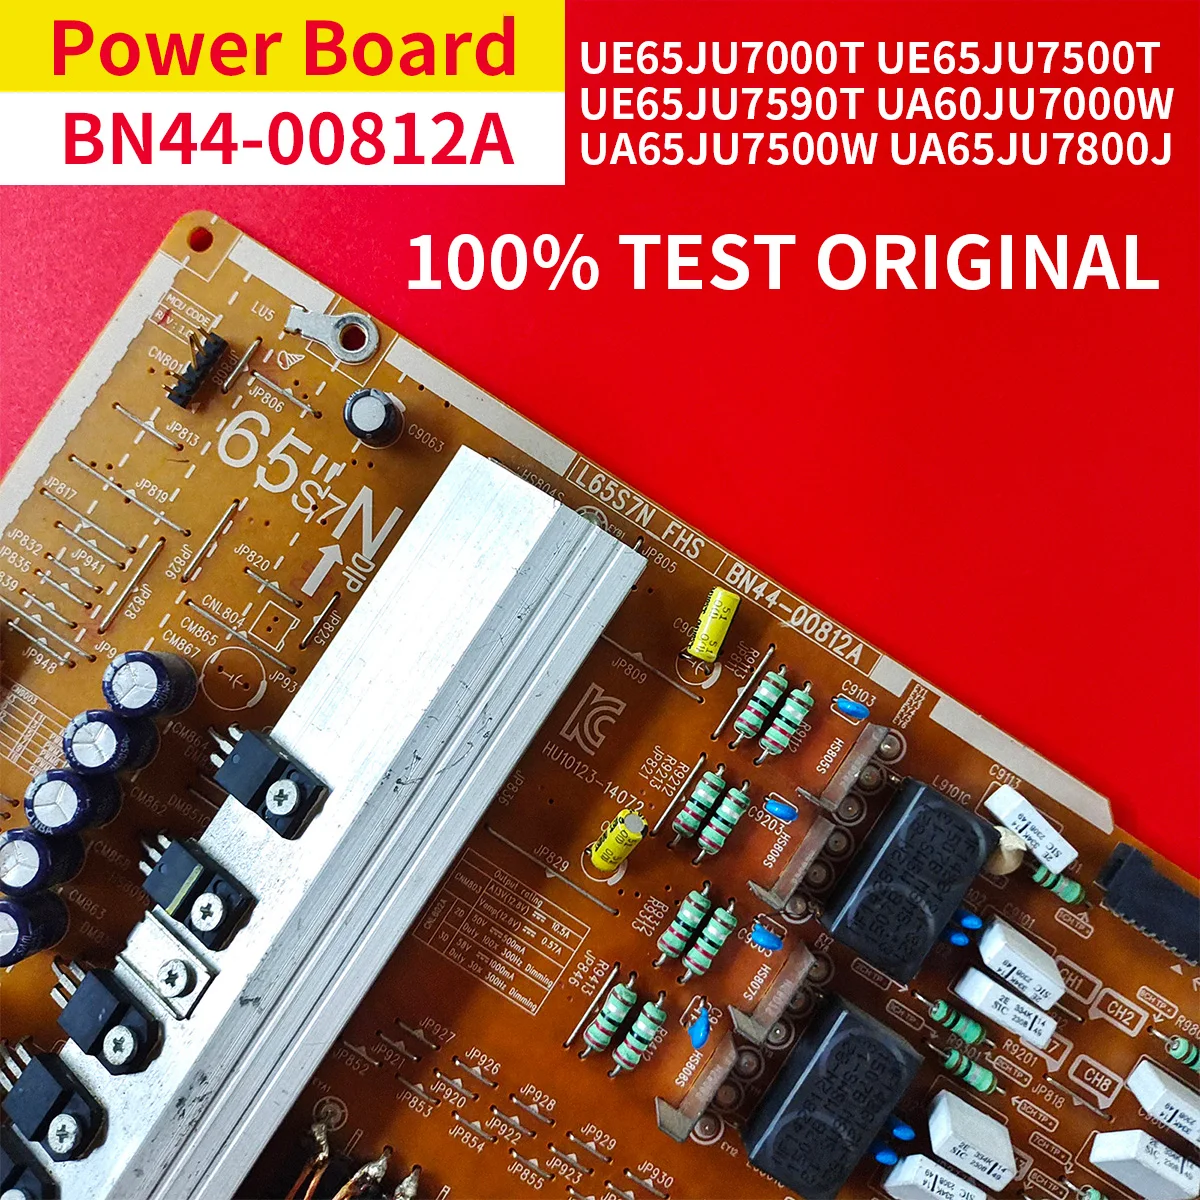 good-quality-original-power-board-bn44-00812a-l65s7n-fhs-professional-power-supply-for-ua60ju7000w-ua65ju7500w-ua65ju7800j